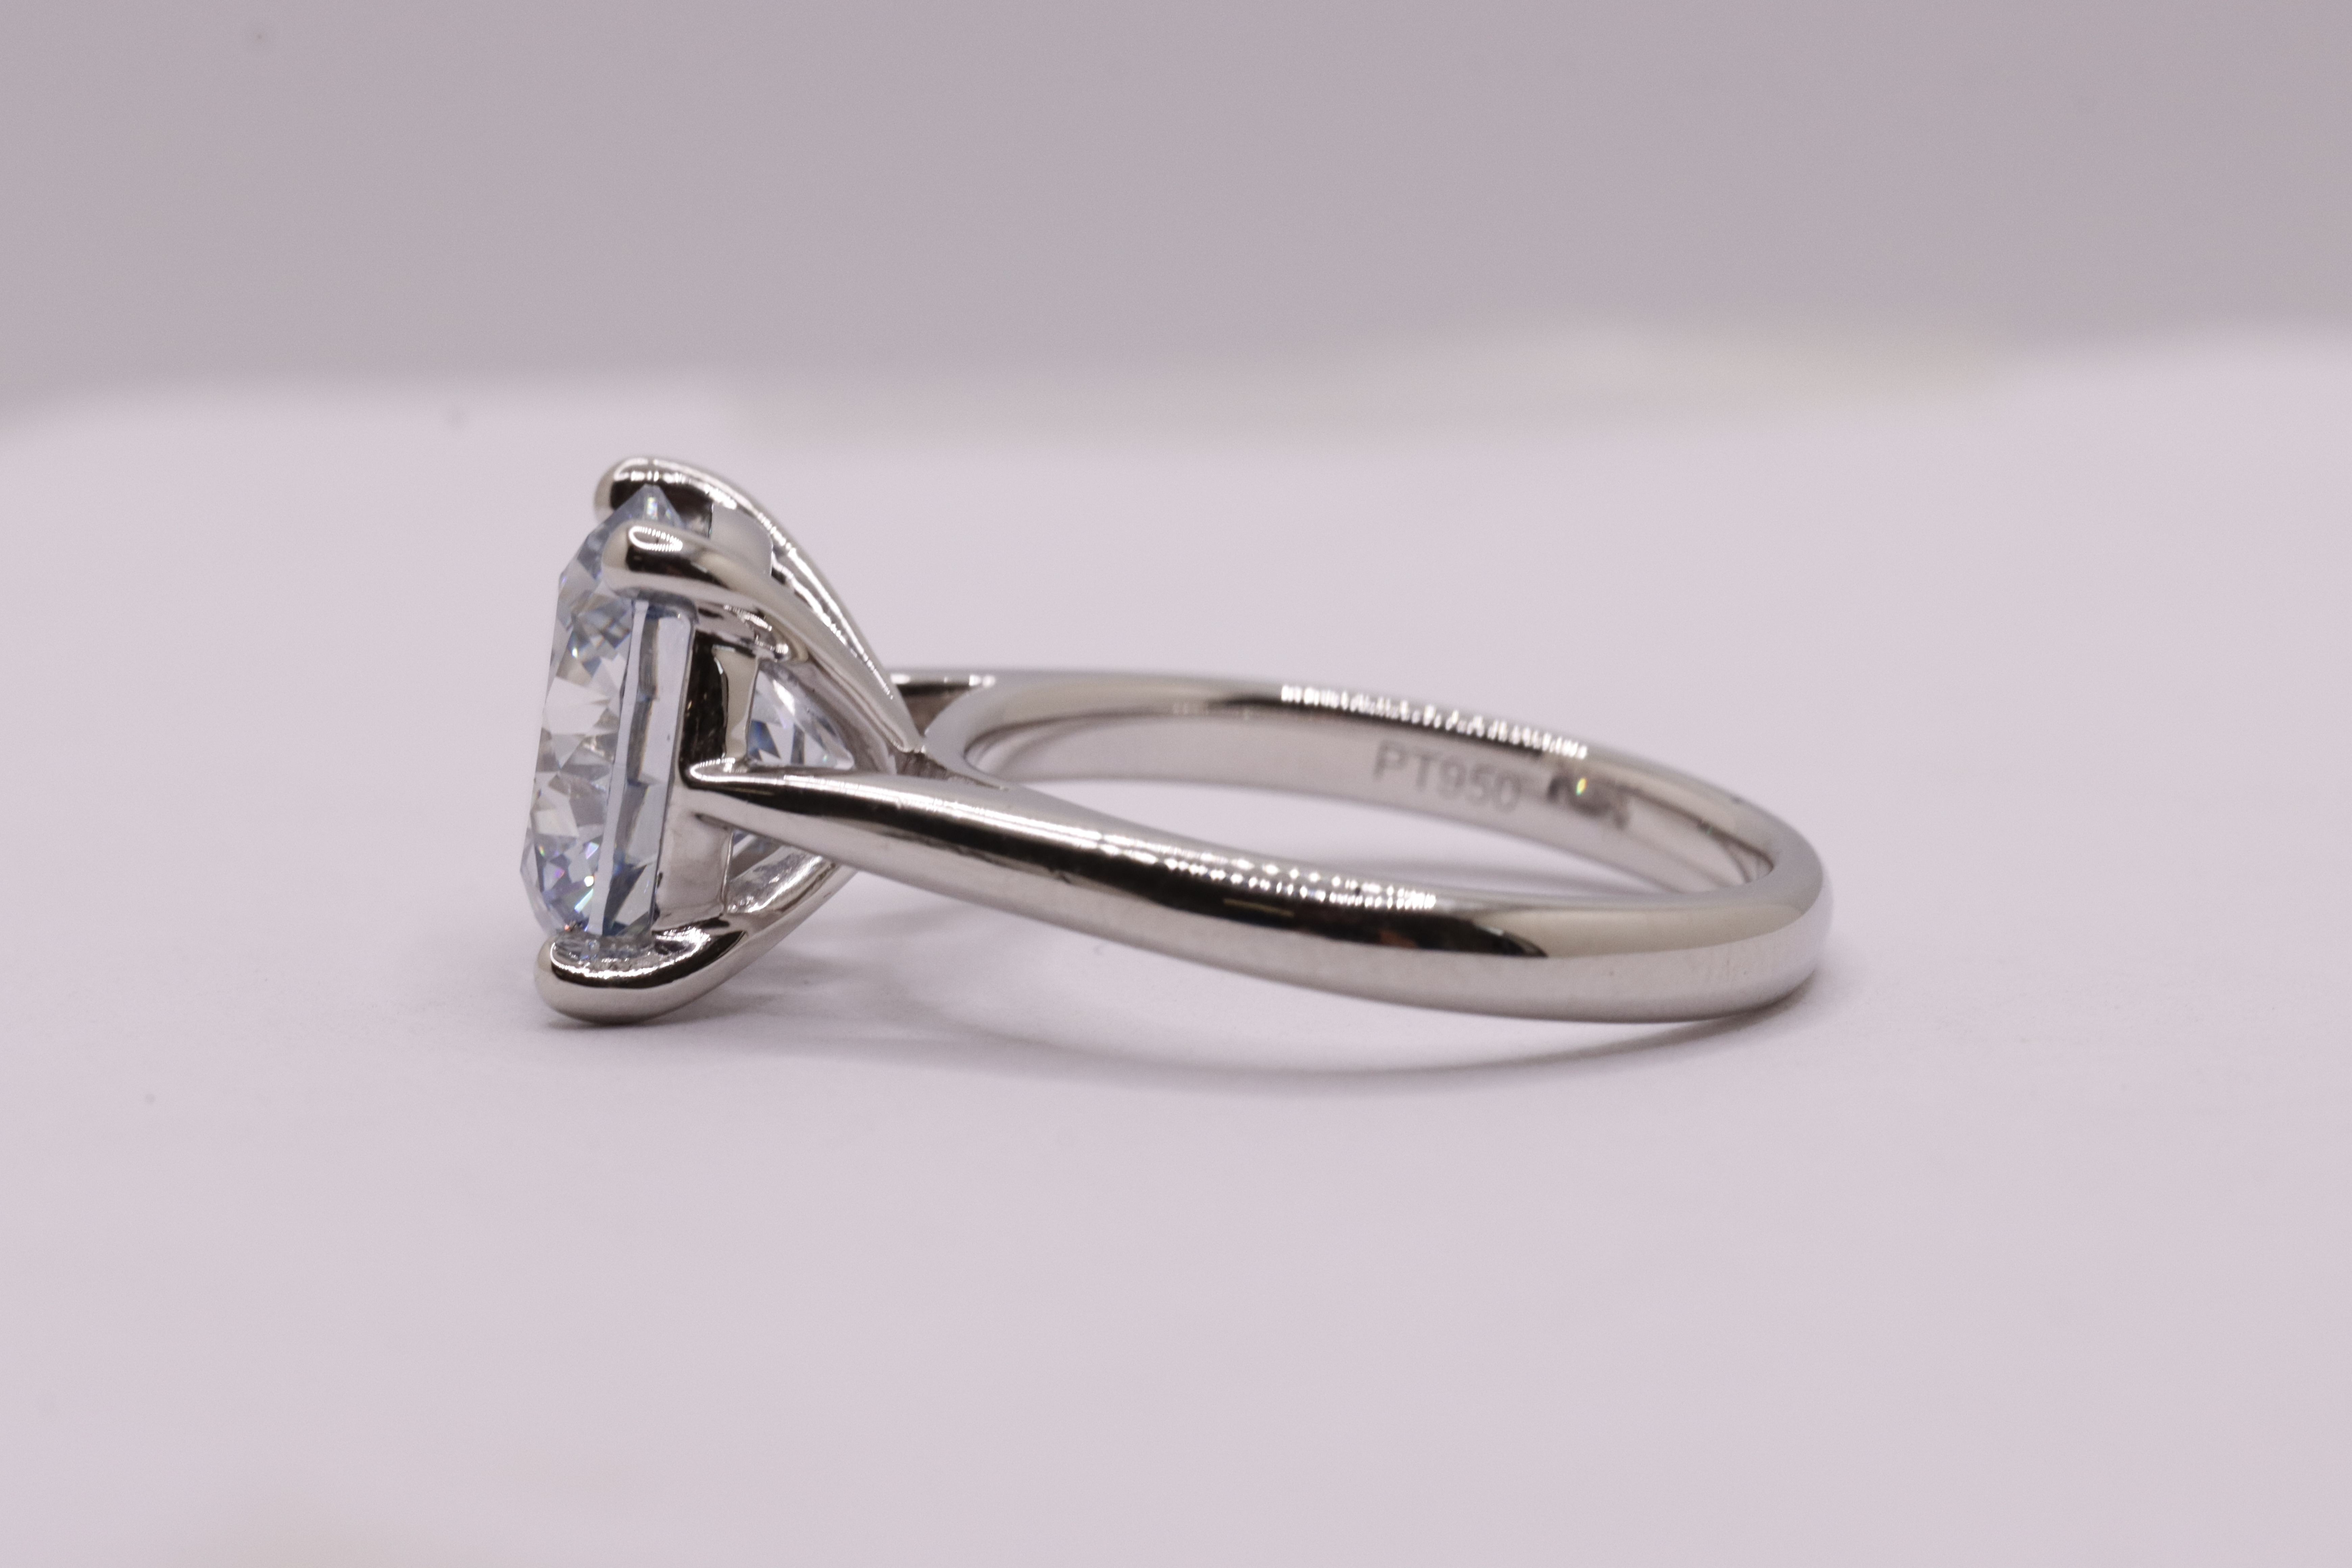 ** ON SALE **Round Brilliant Cut Diamond 4.04 Carat Fancy Blue Colour VVS2 Clarity Platinum Ring - Image 7 of 14